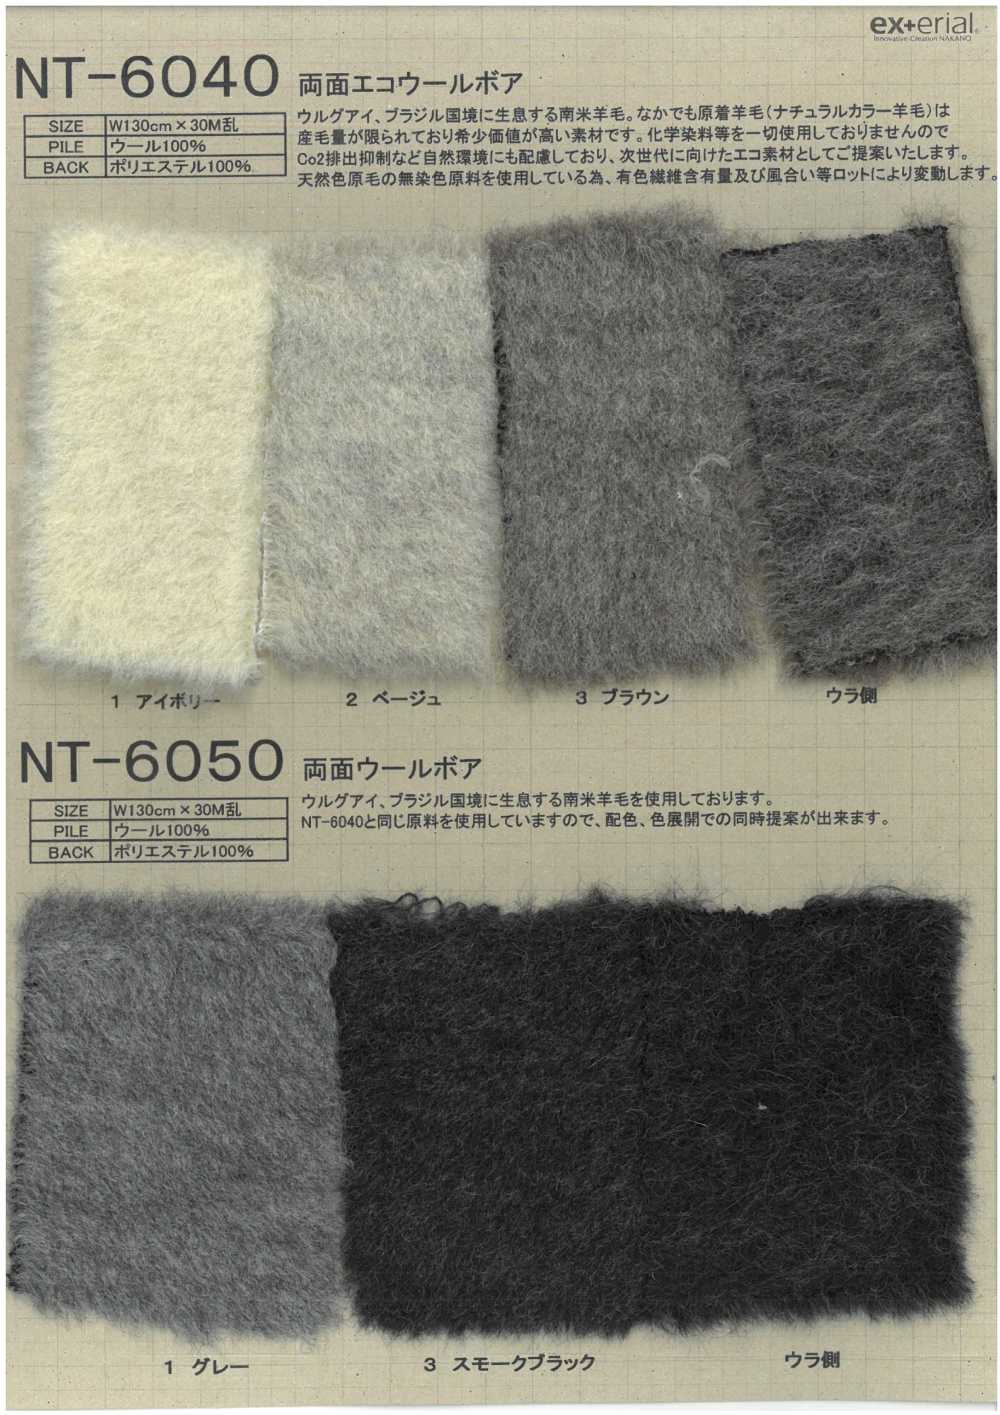 NT-6050 Craft Fur [doppelseitige Wollboa][Textilgewebe] Nakano-Strümpfe-Industrie